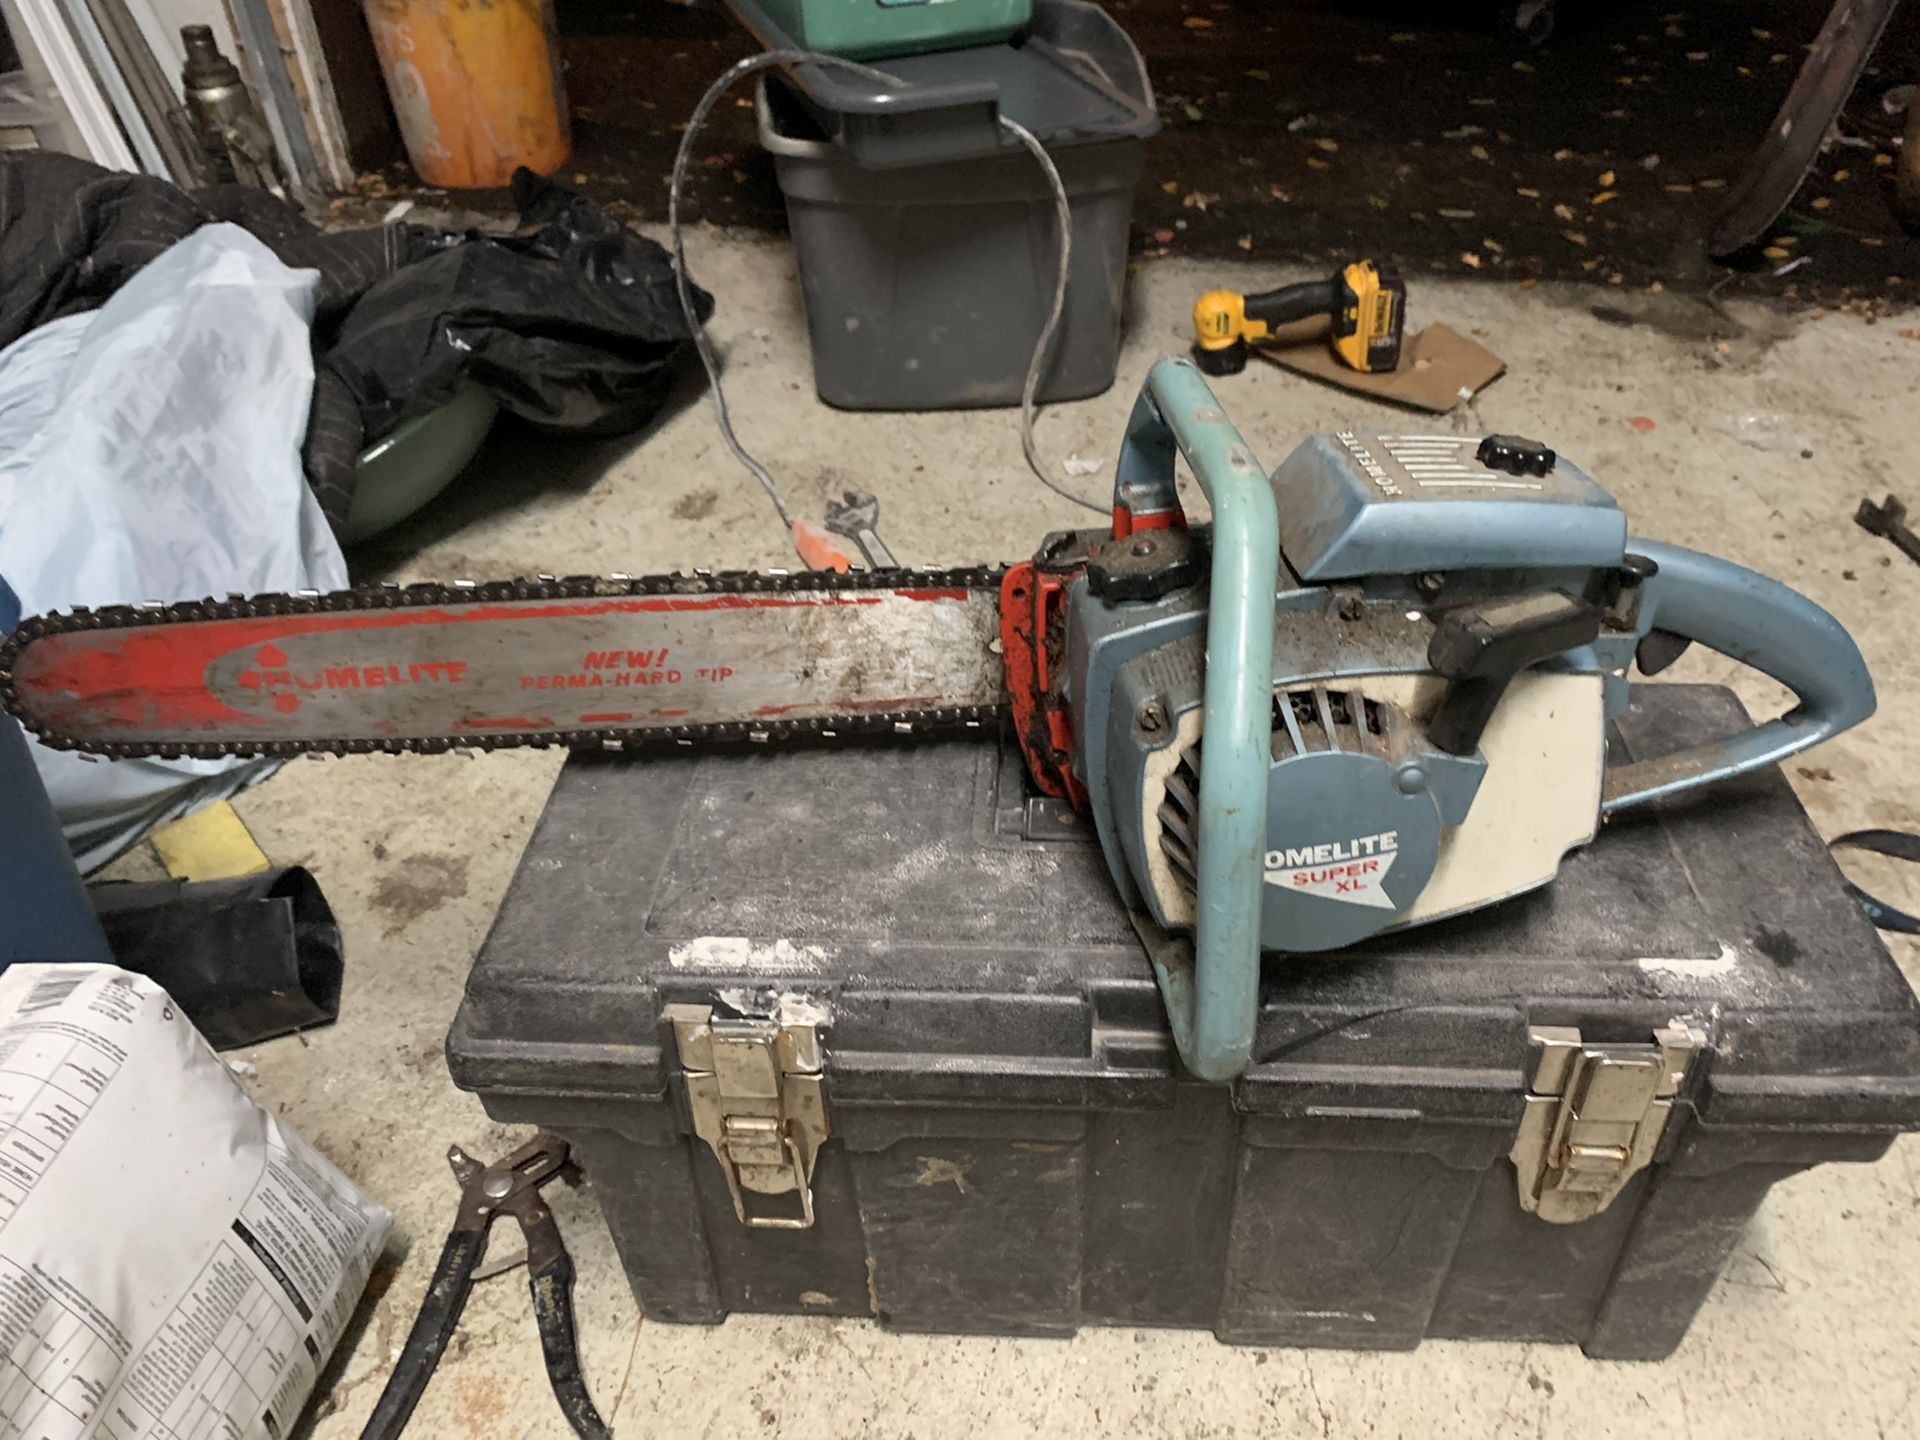 Homlite chain saw